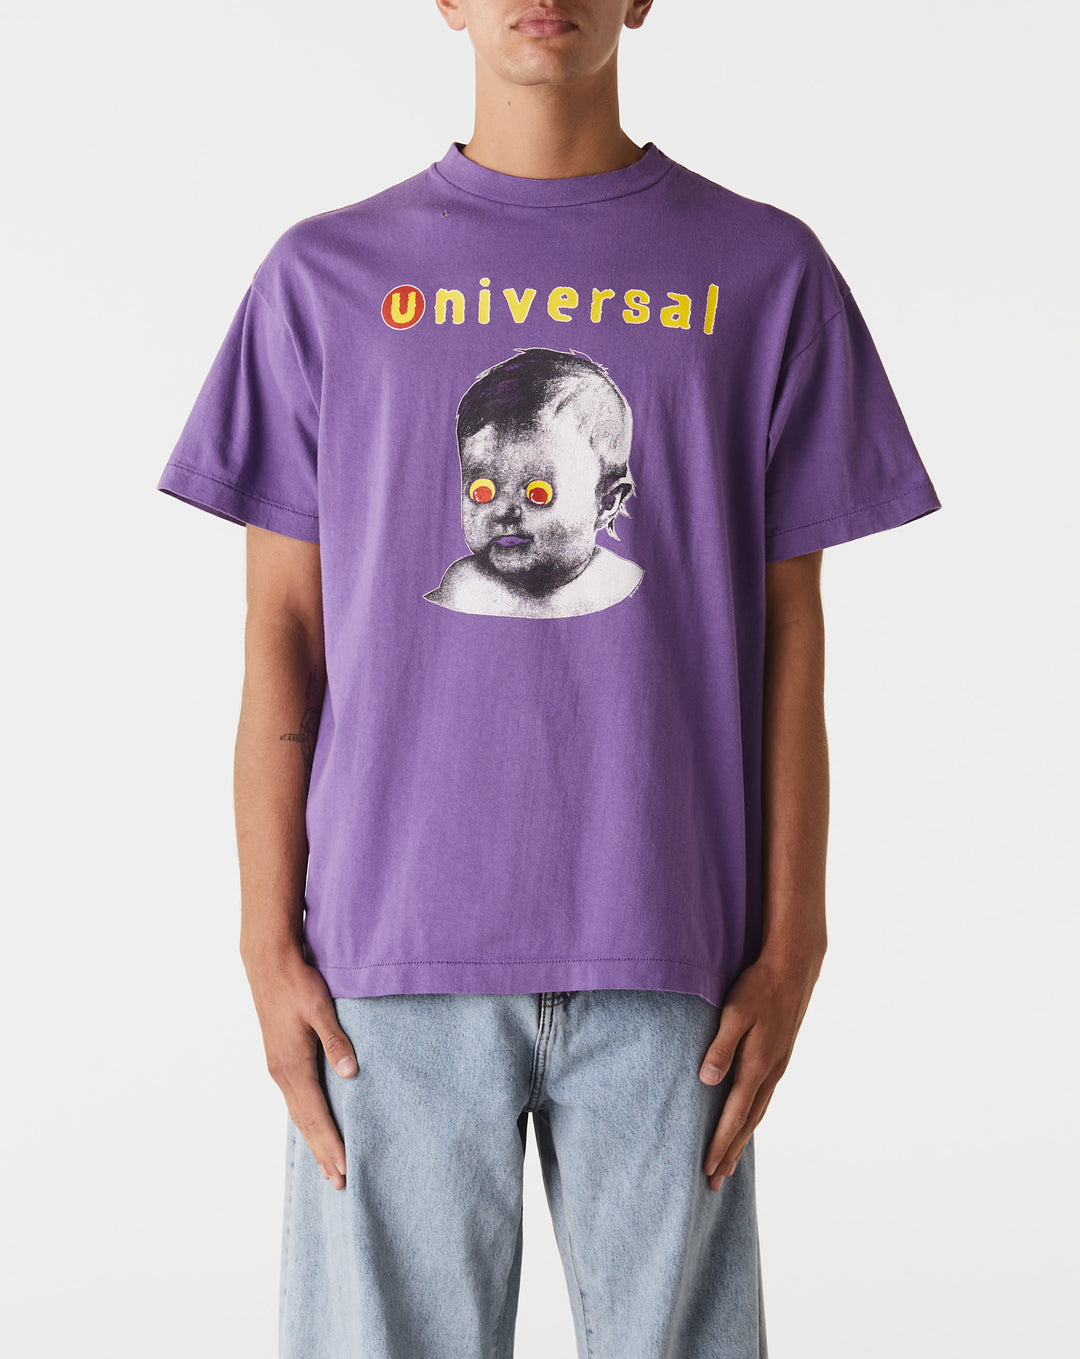 Saint Michael Universal T-Shirt  - XHIBITION